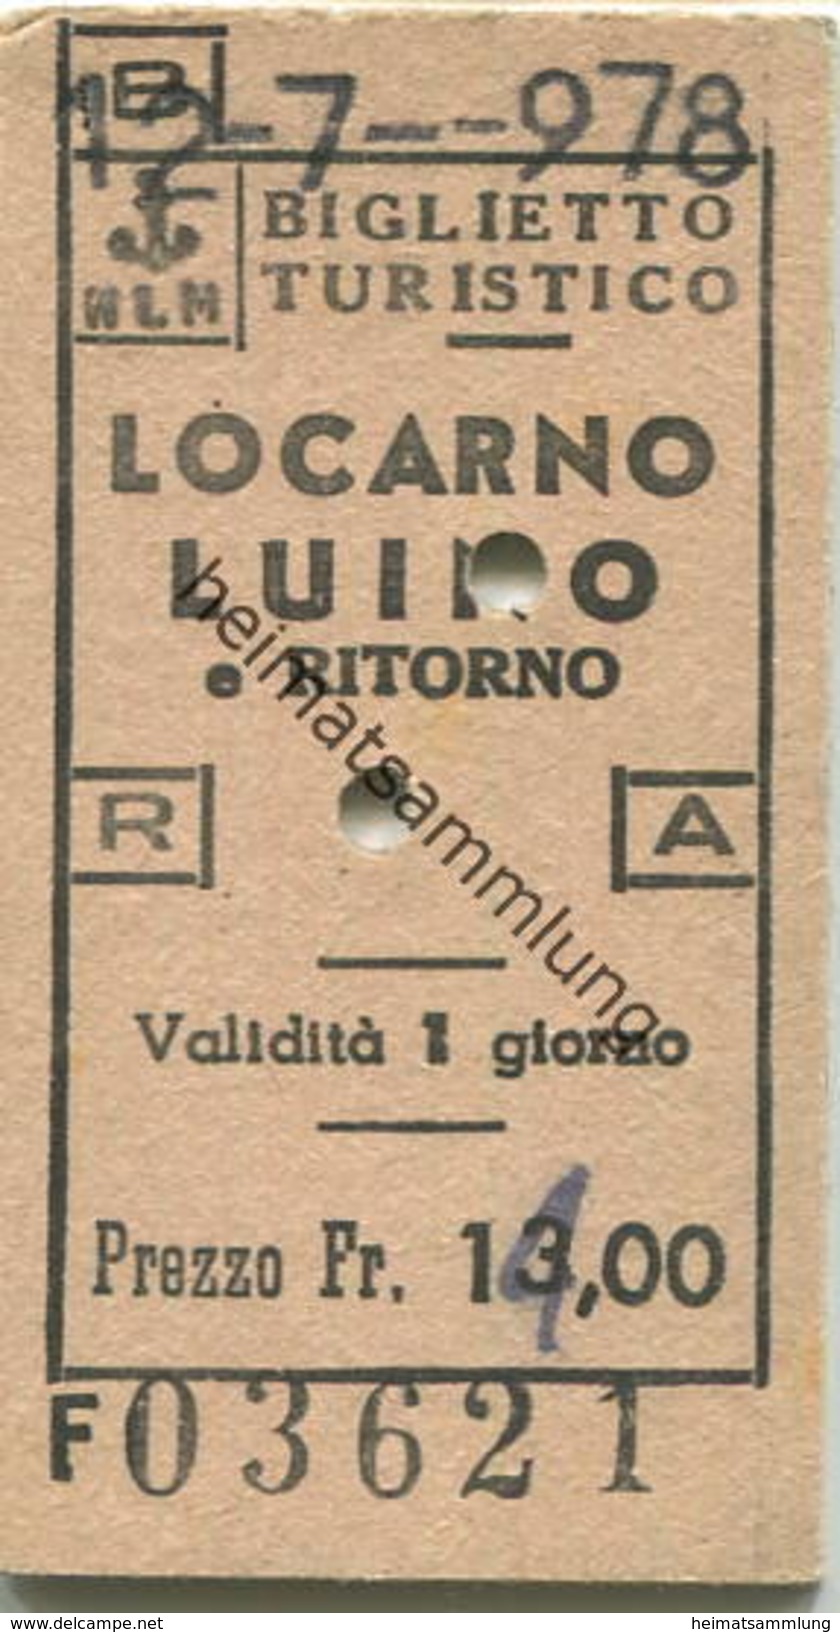 Schweiz - NLM - Locarno Luino - Fahrkarte 1978 - Europe